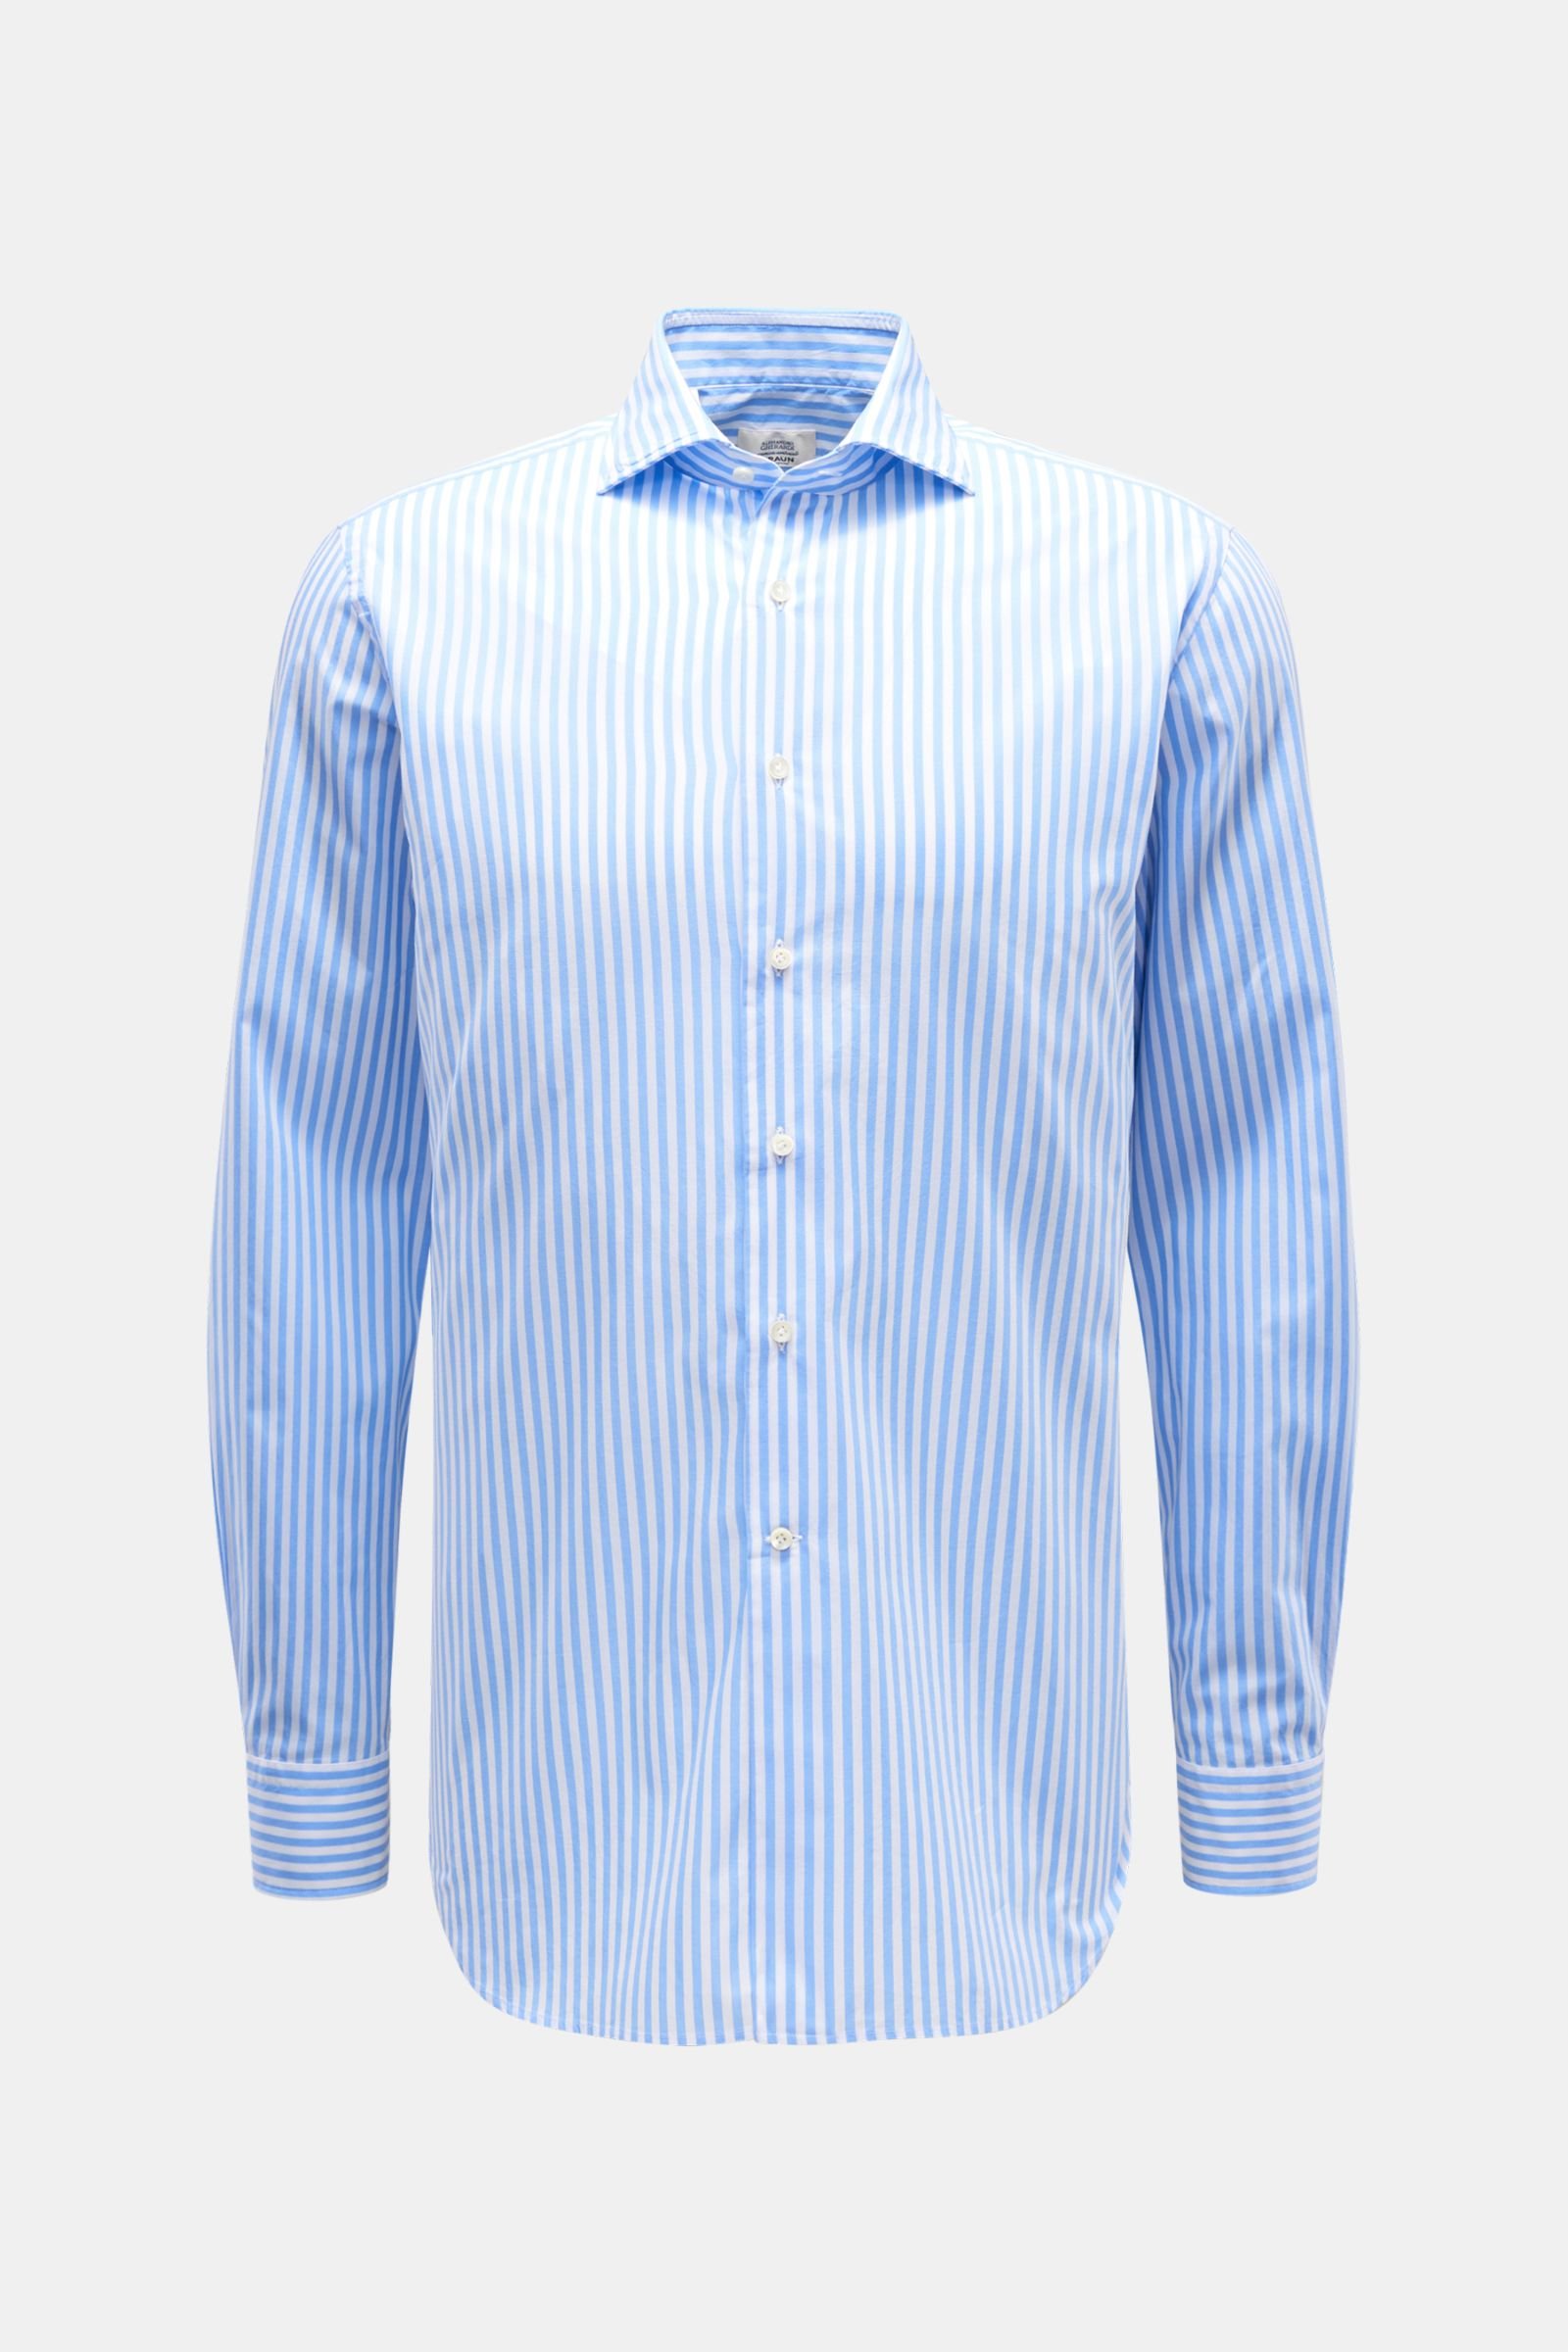 Casual shirt shark collar light blue/white striped